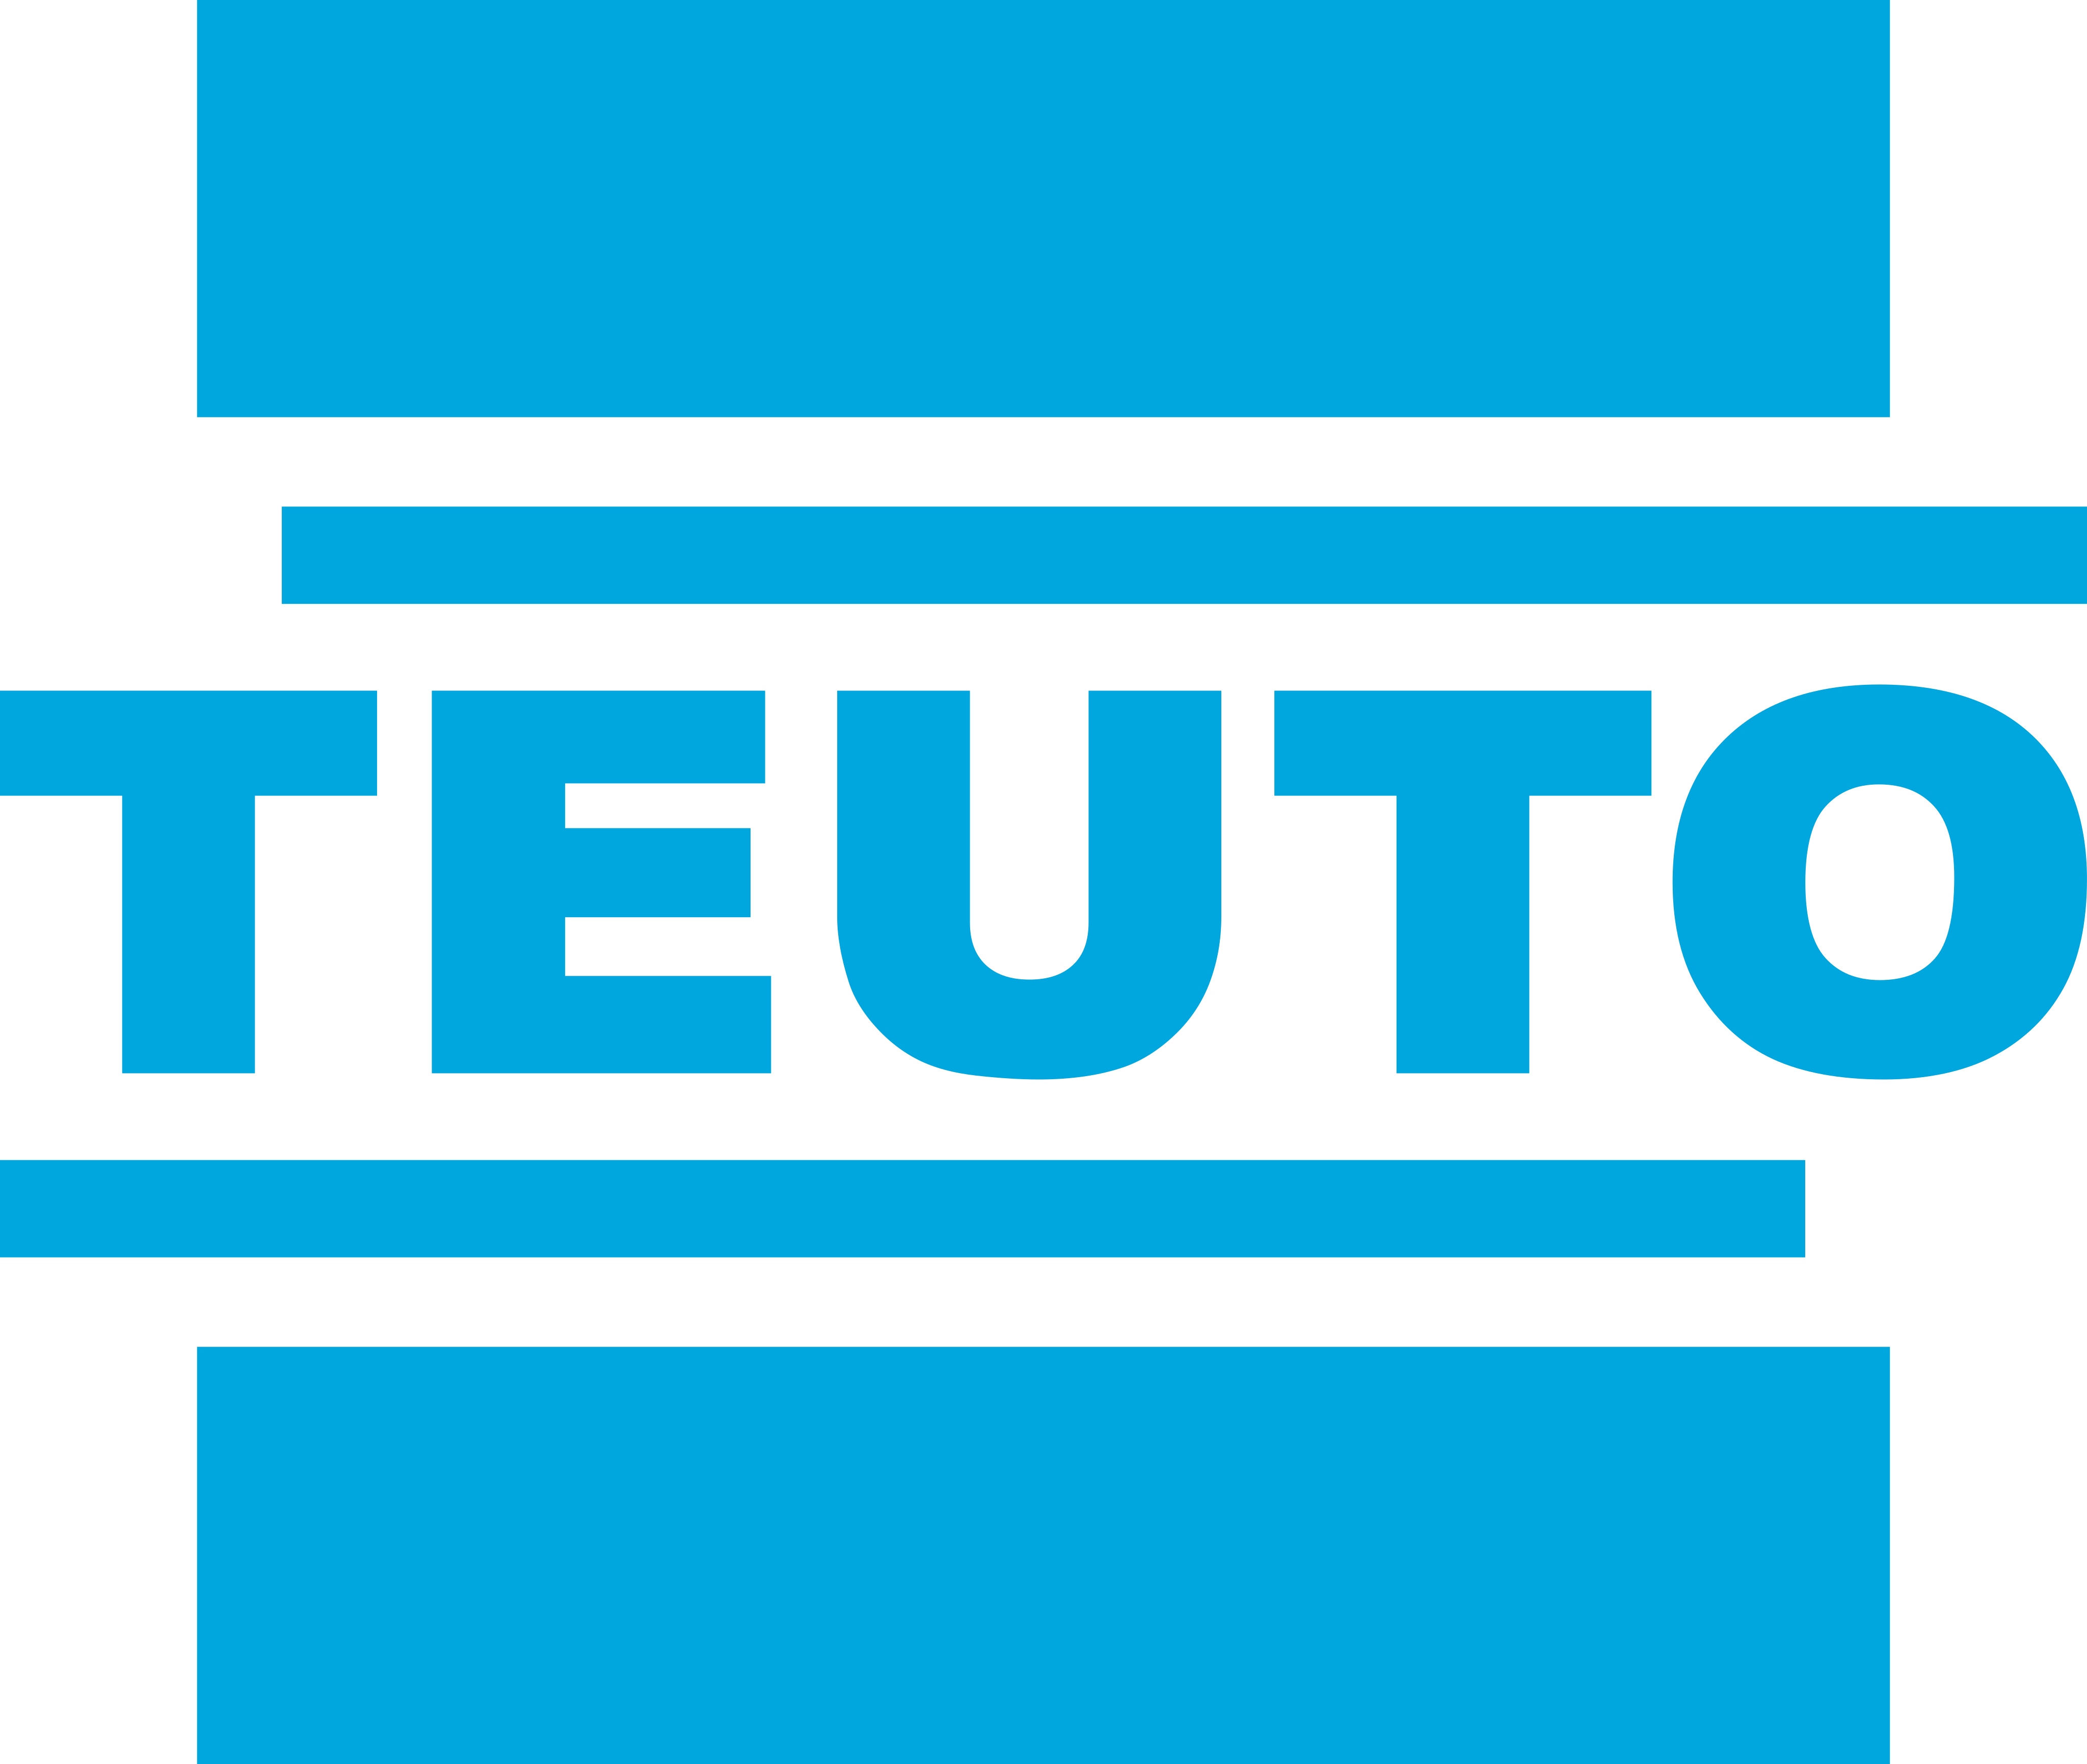 Laboratório Teuto Logo.